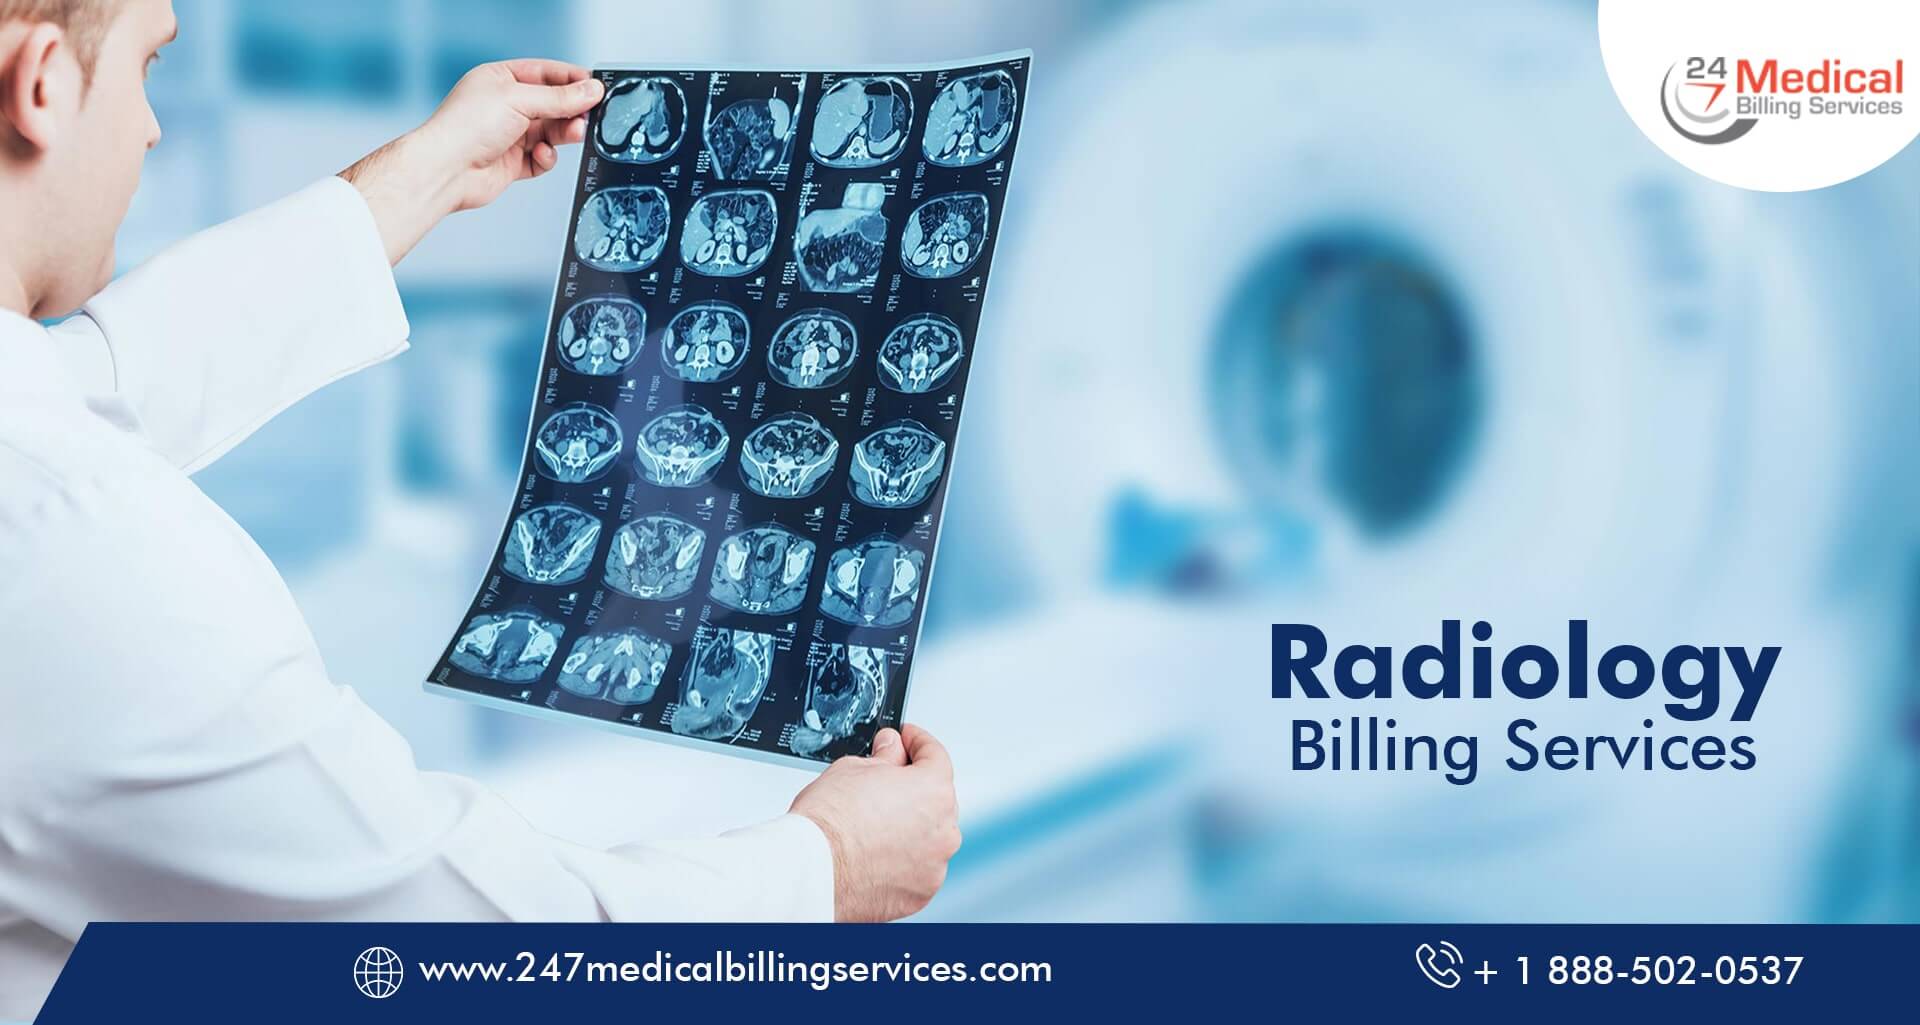  Radiology Billing Services in Las Vegas, Nevada (NV)